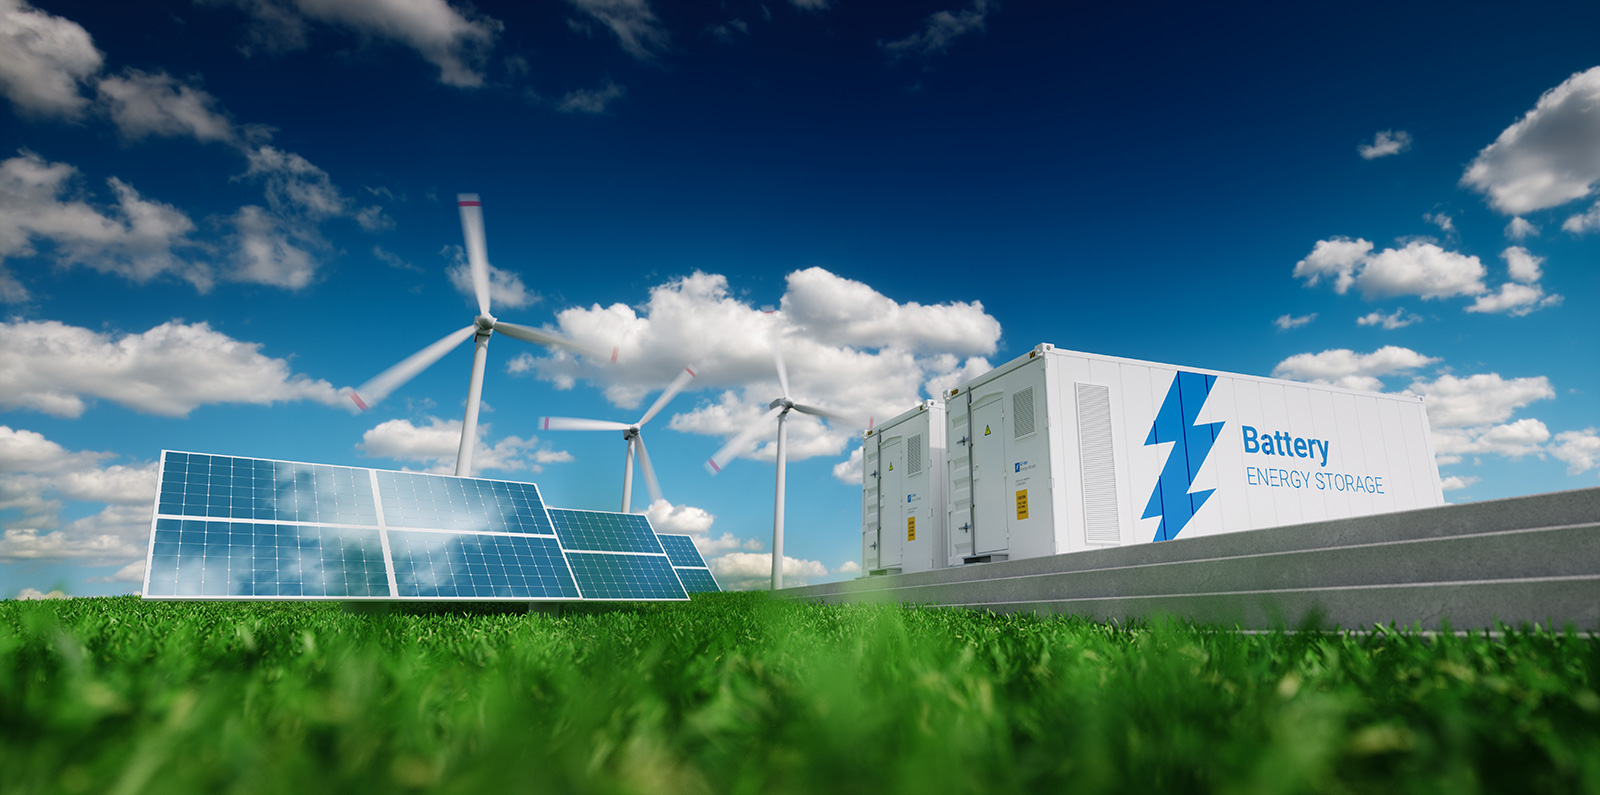 windmills, solar panels, and battery energy storage